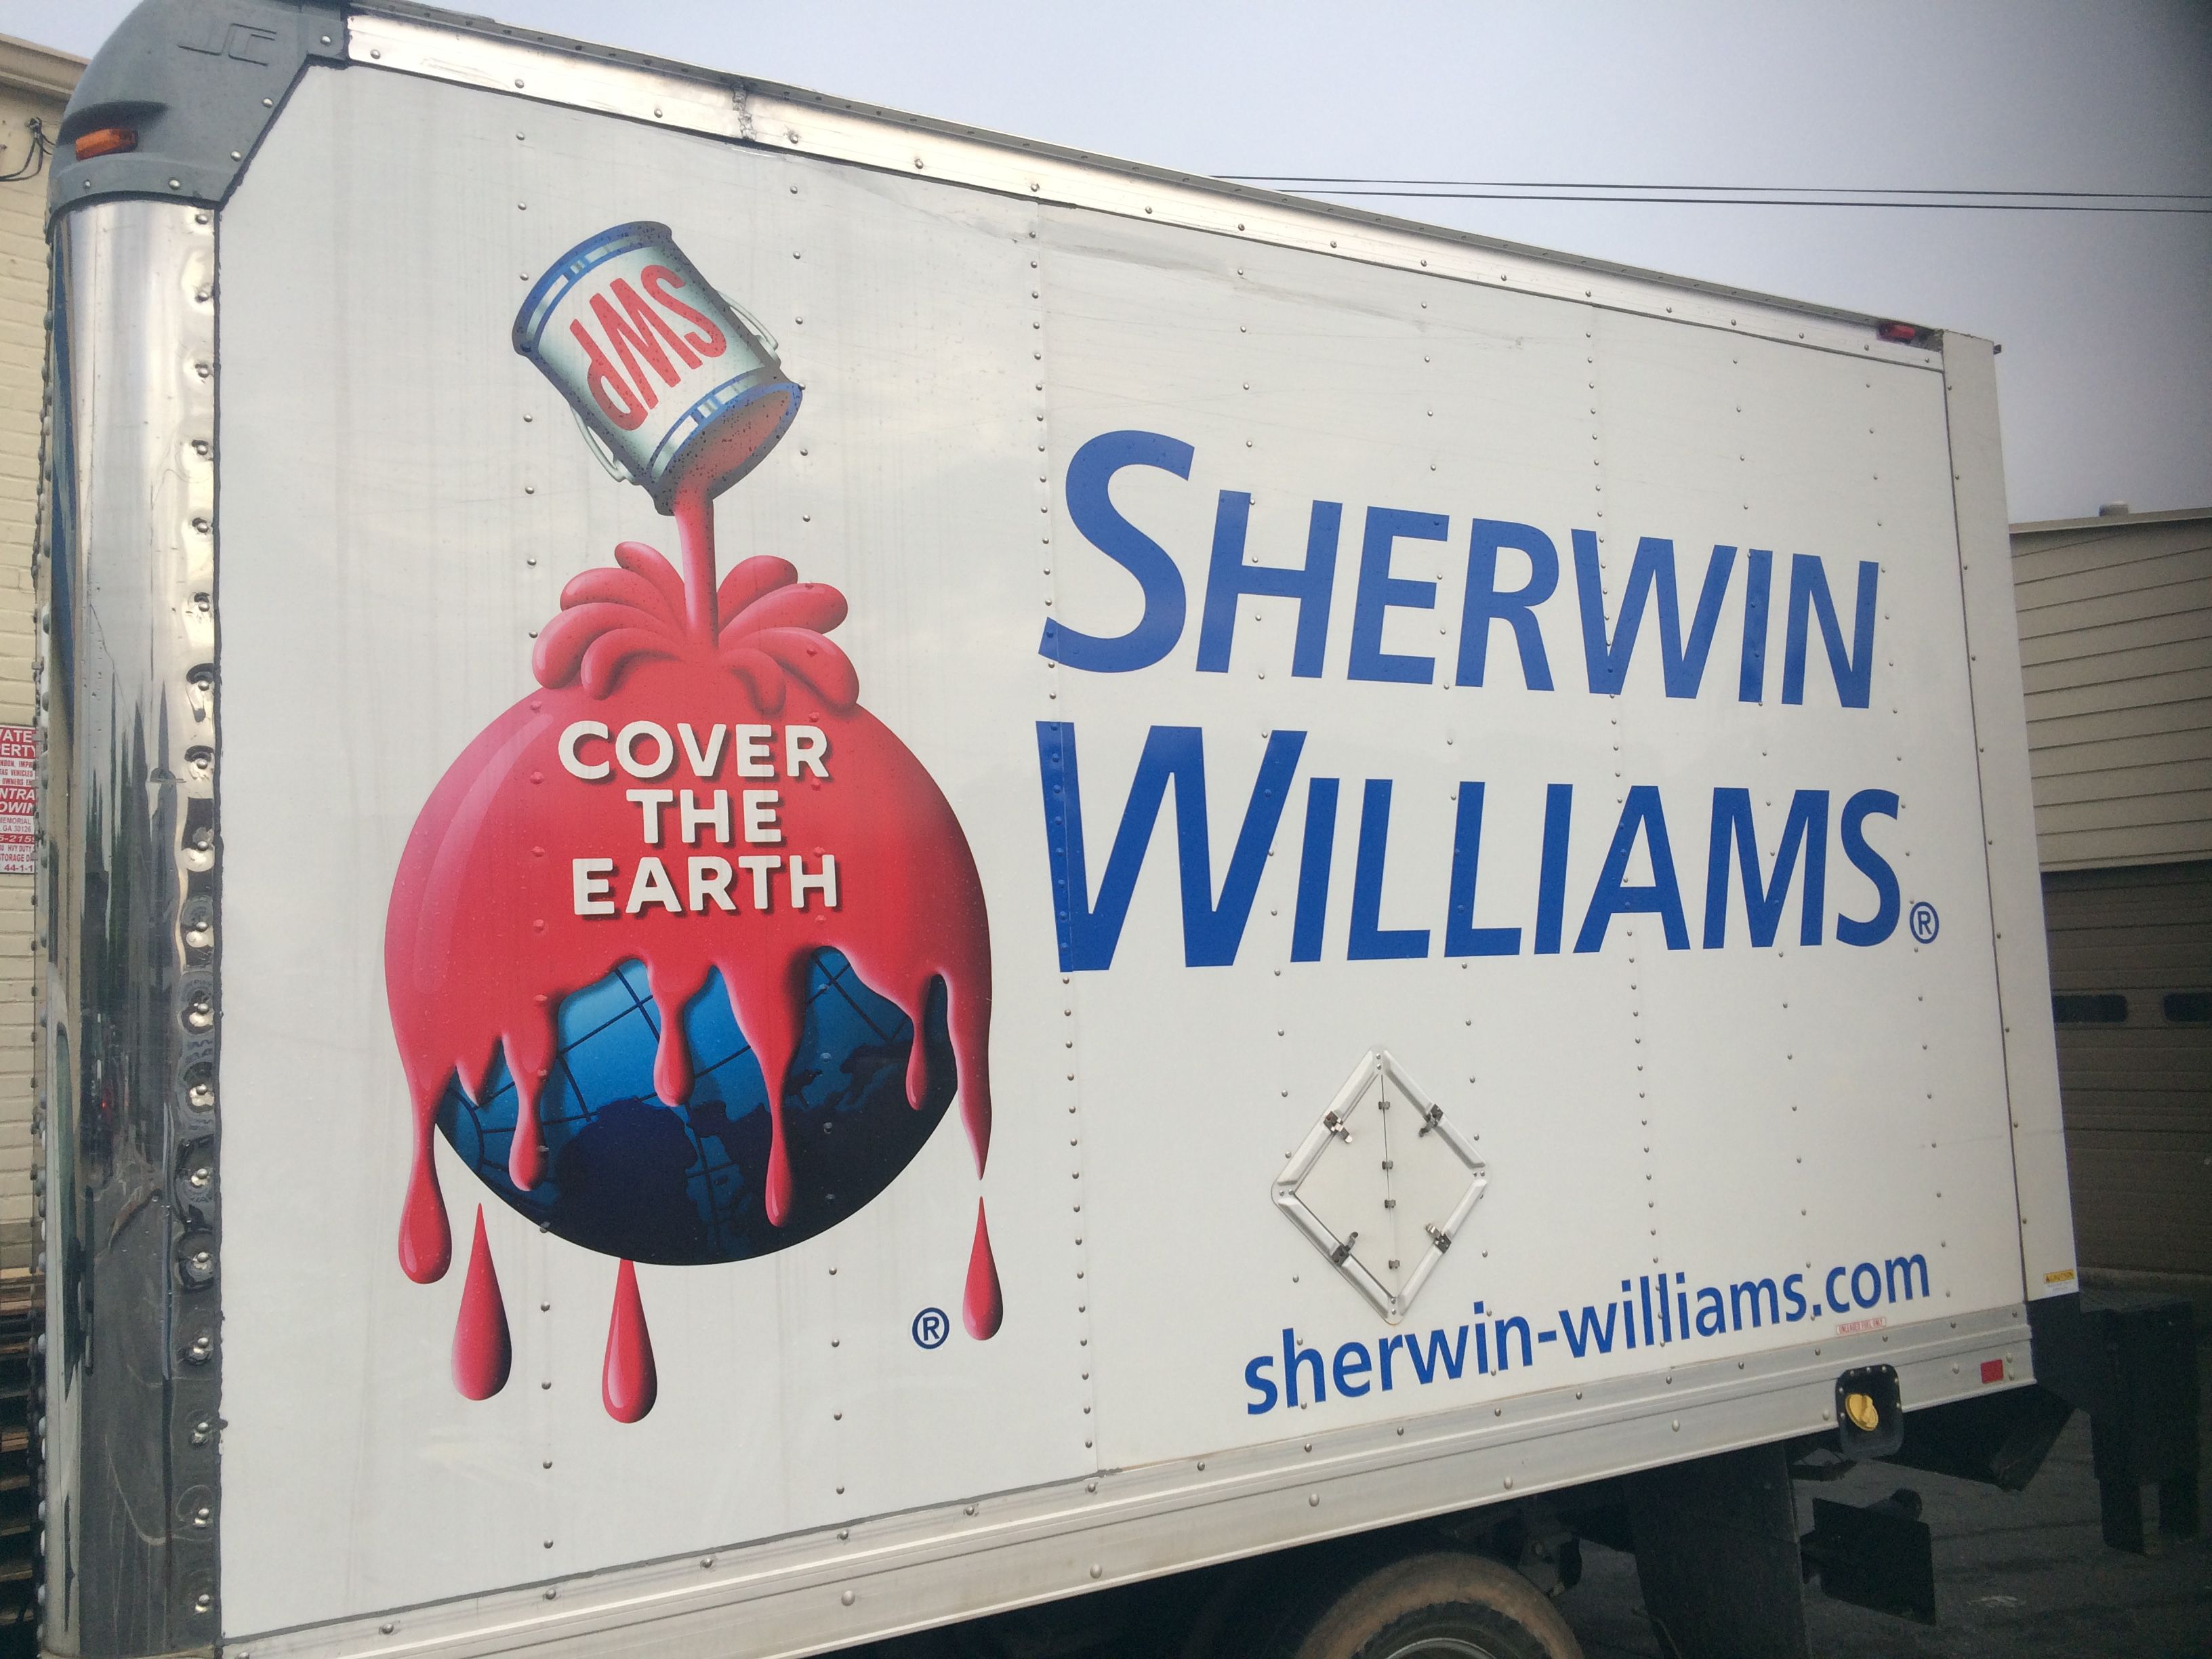 sherwin williams company logo